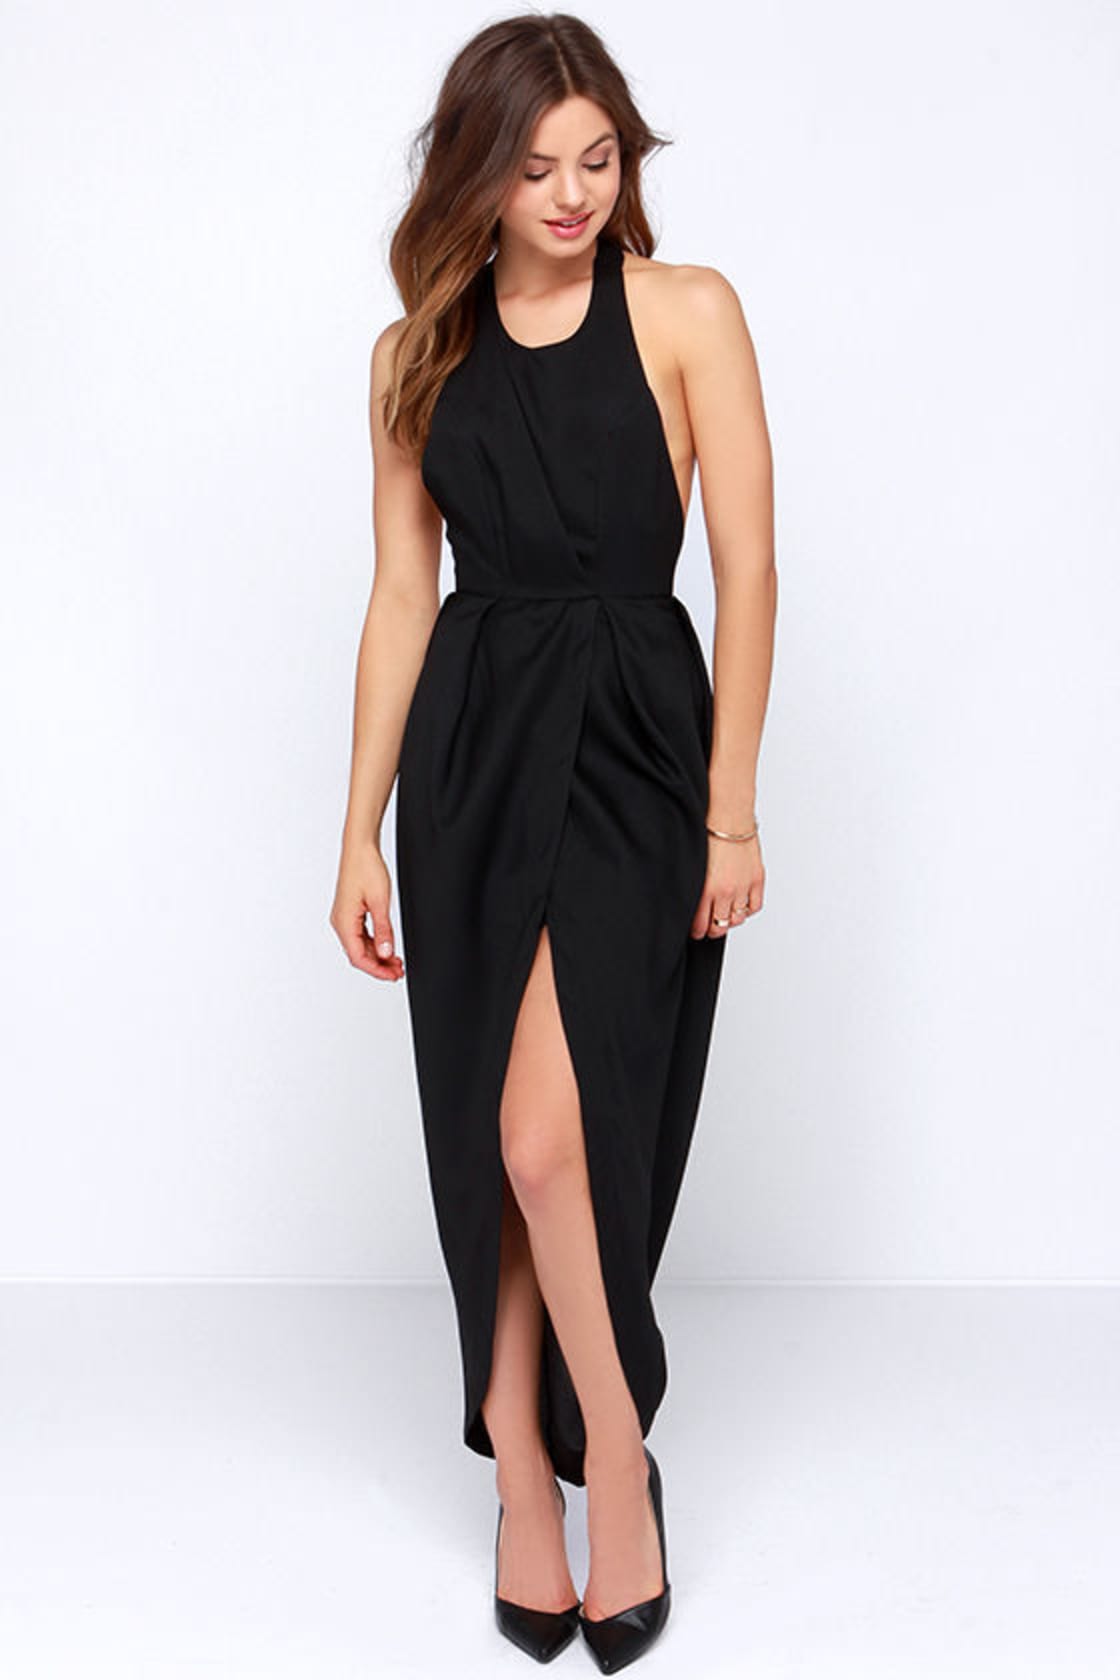 Sexy Black Dress - Backless Dress - Surplice Dress - $48.00 - Lulus